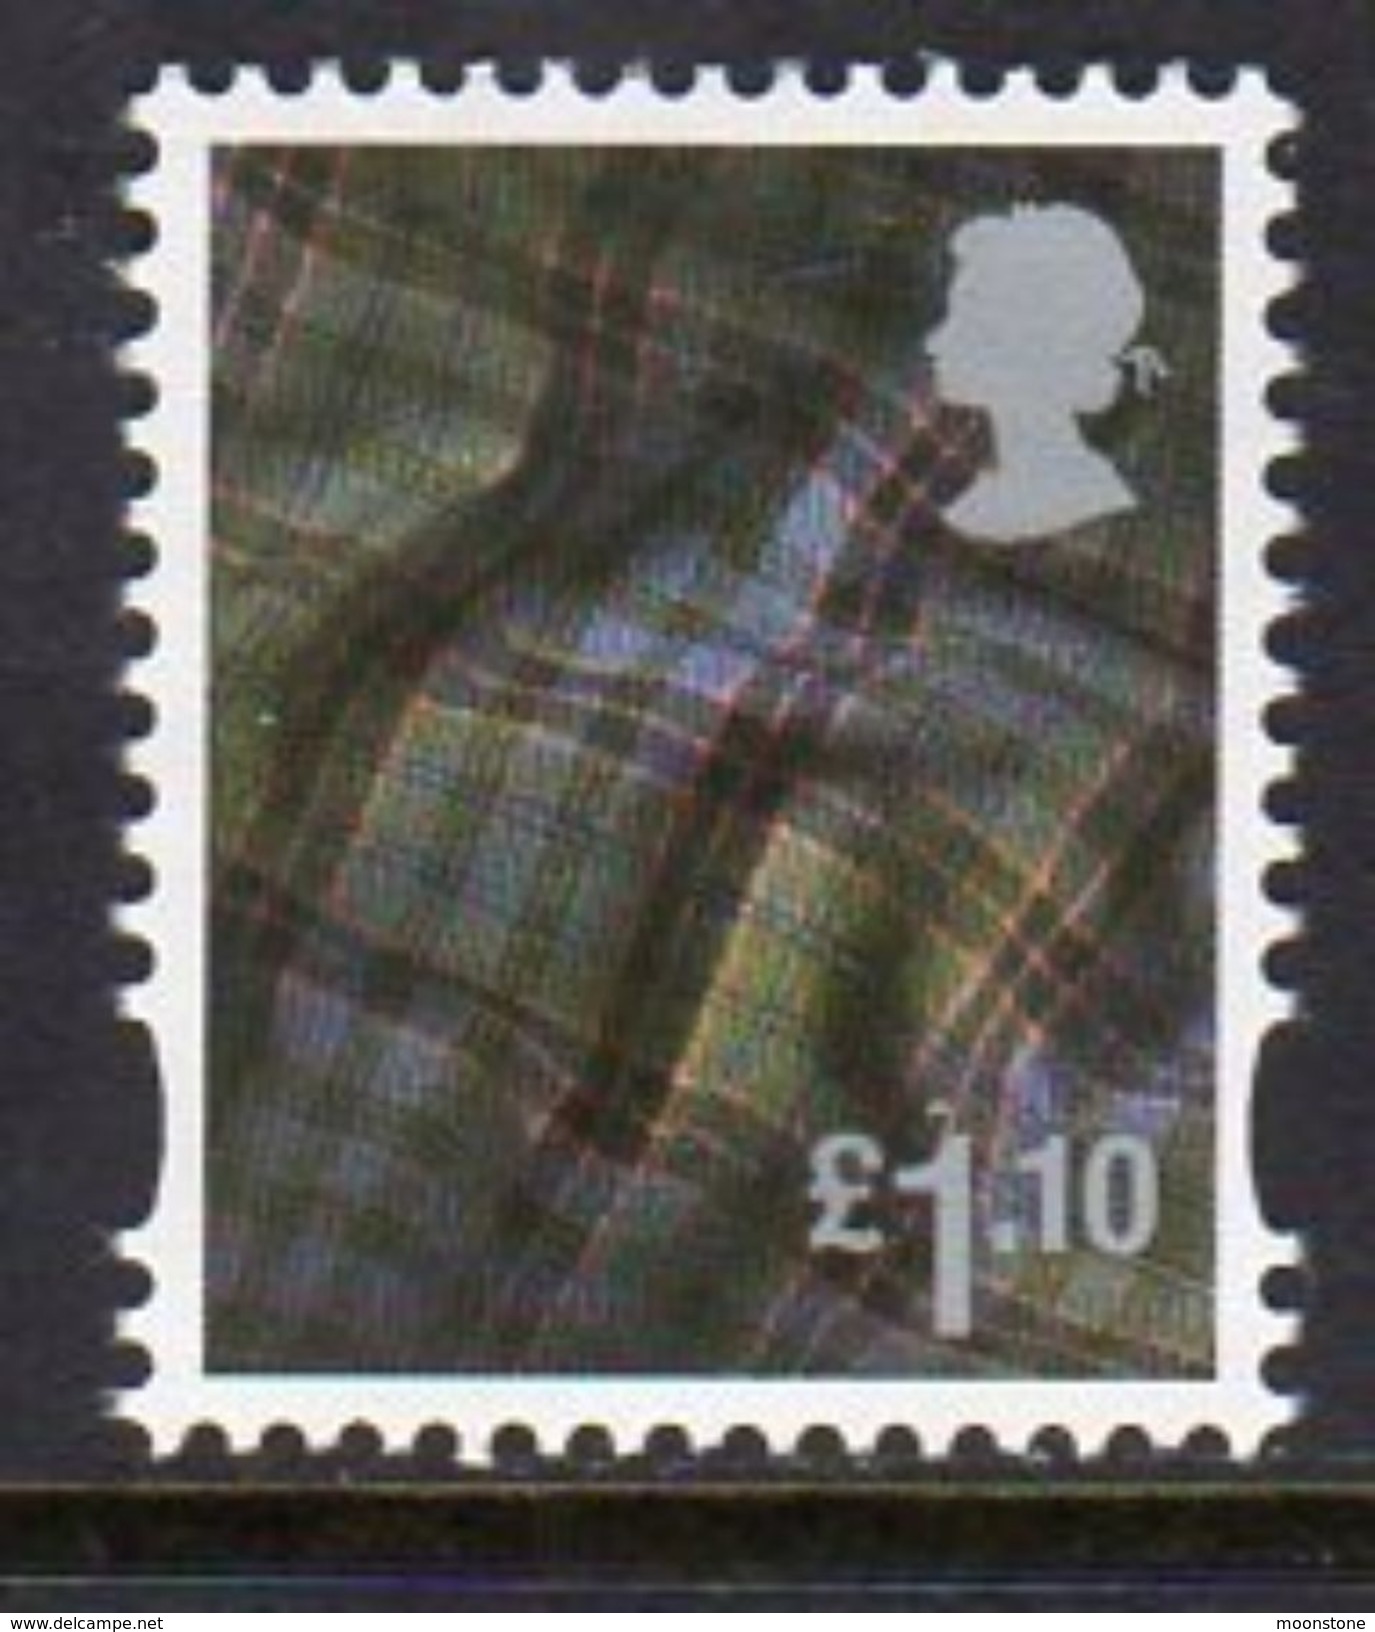 GB Scotland 2003-17 £1.10 Tartan Cartor Regional Country, With Border, MNH (SG S142) - Scotland